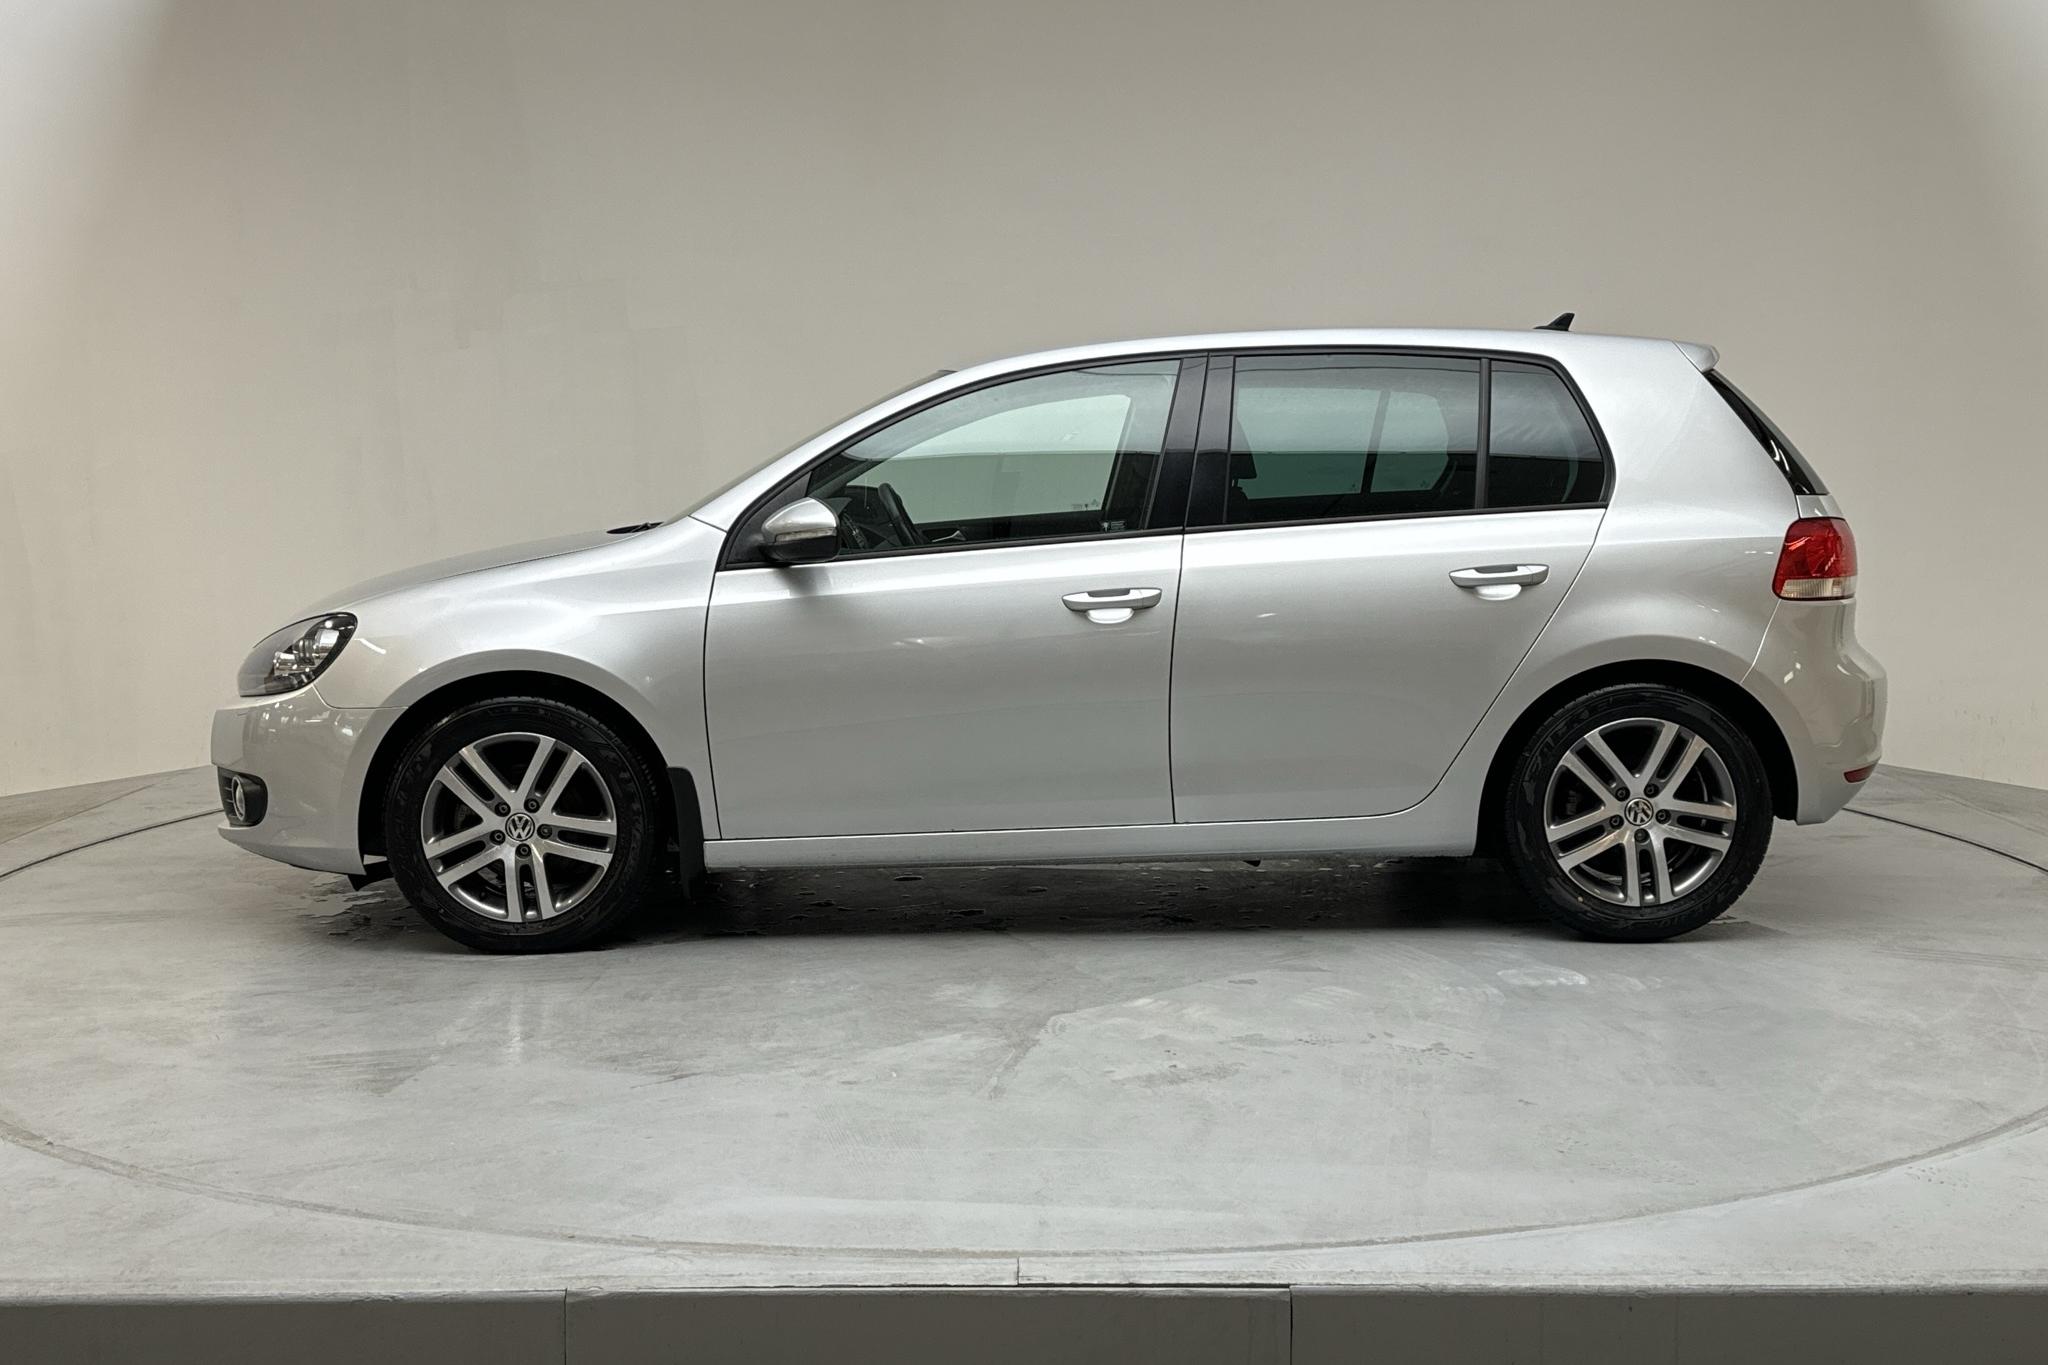 VW Golf VI 1.6 TDI BlueMotion Technology 5dr (105hk) - 68 390 km - Automatic - silver - 2012